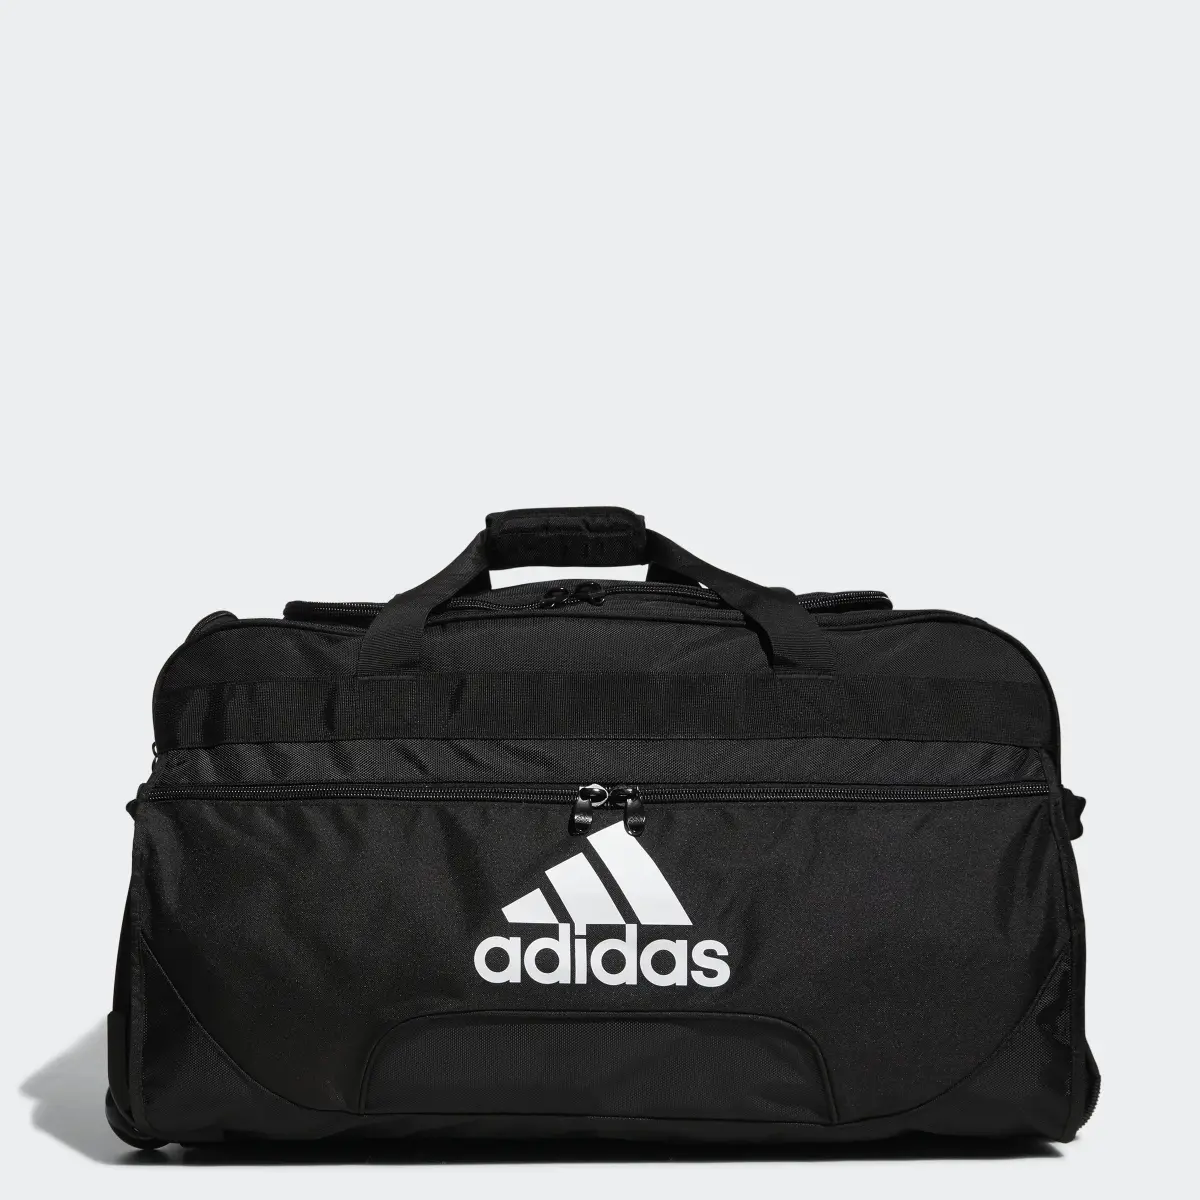 Adidas Team Wheel Bag. 1